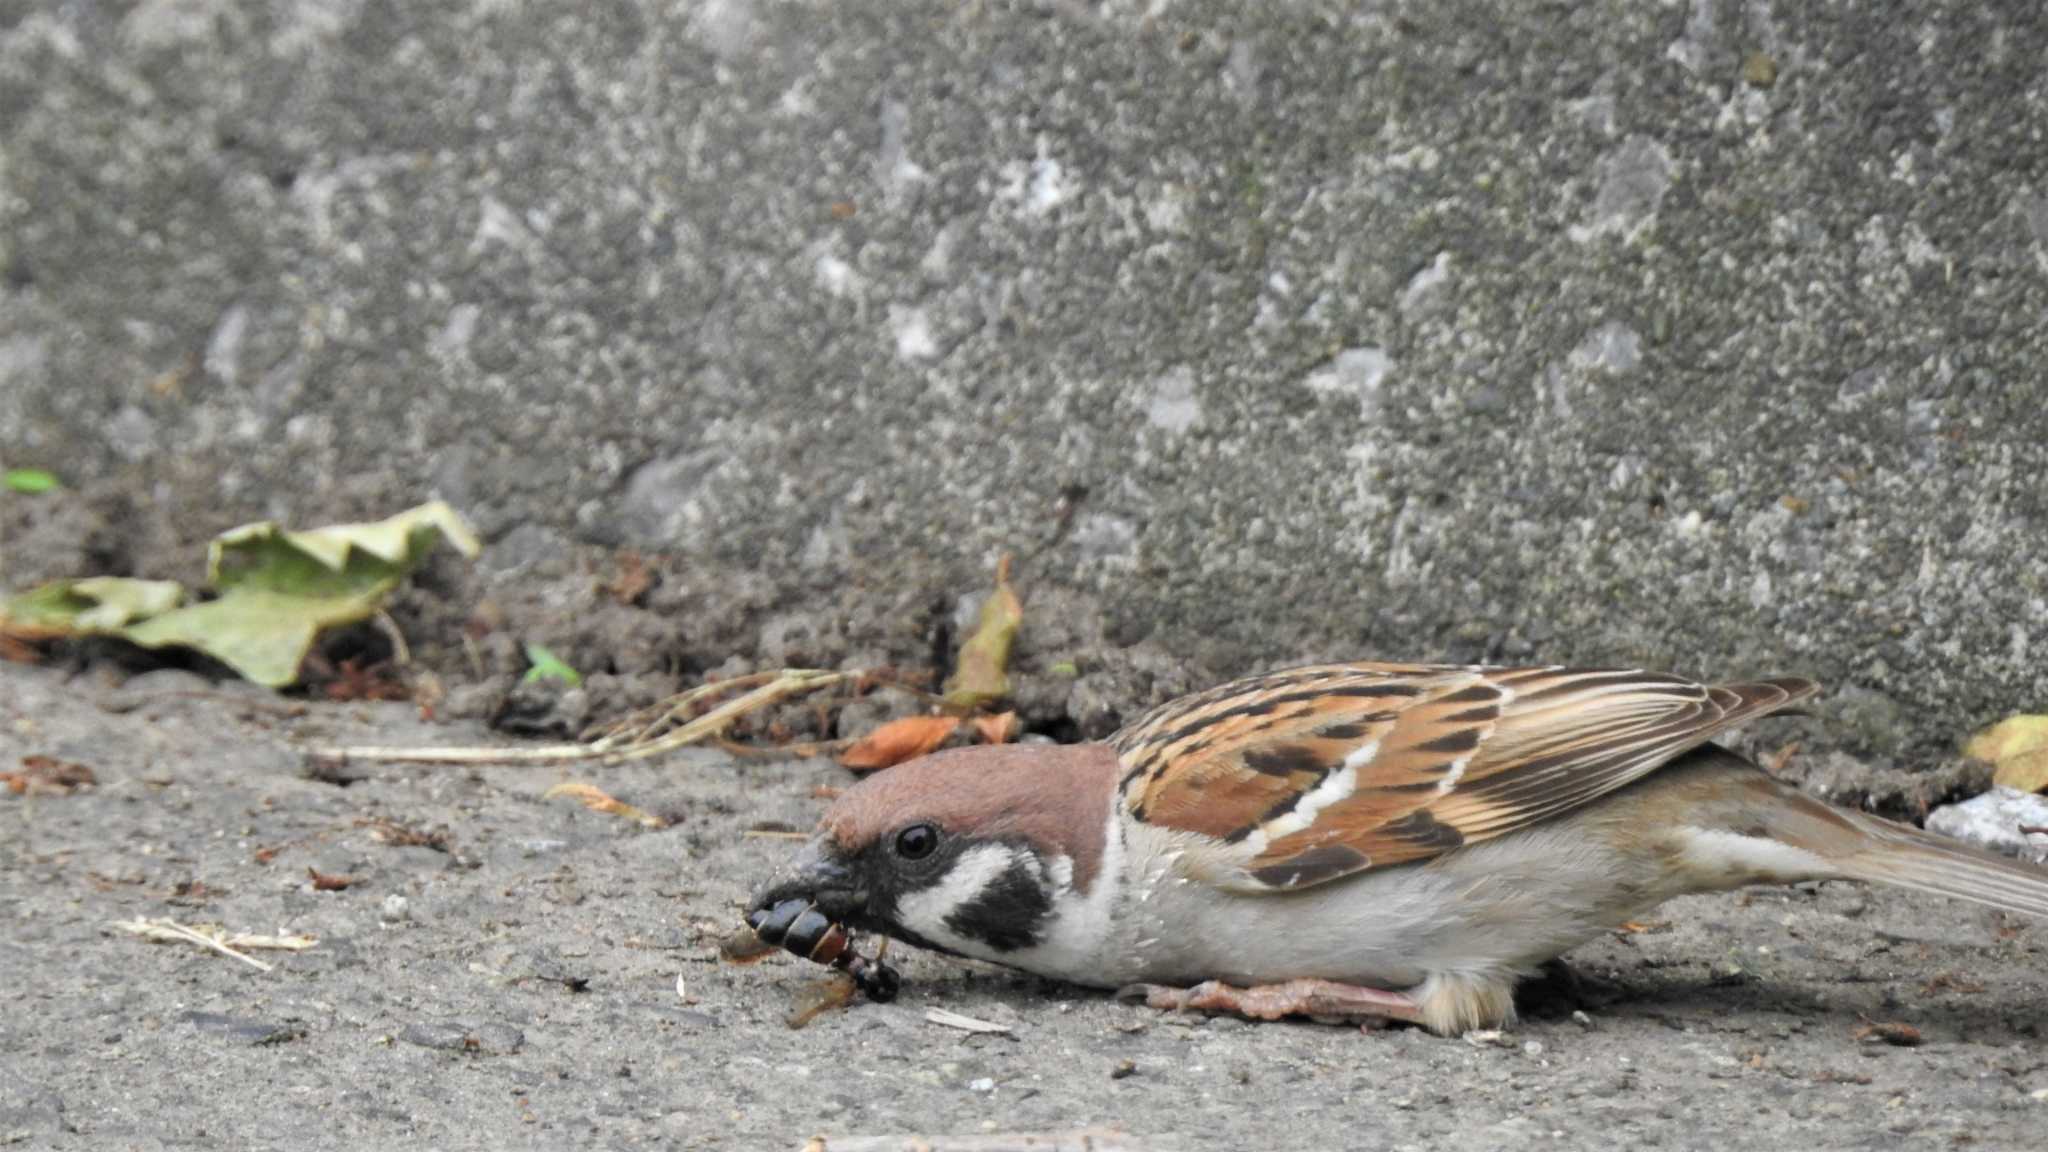 Eurasian Tree Sparrow